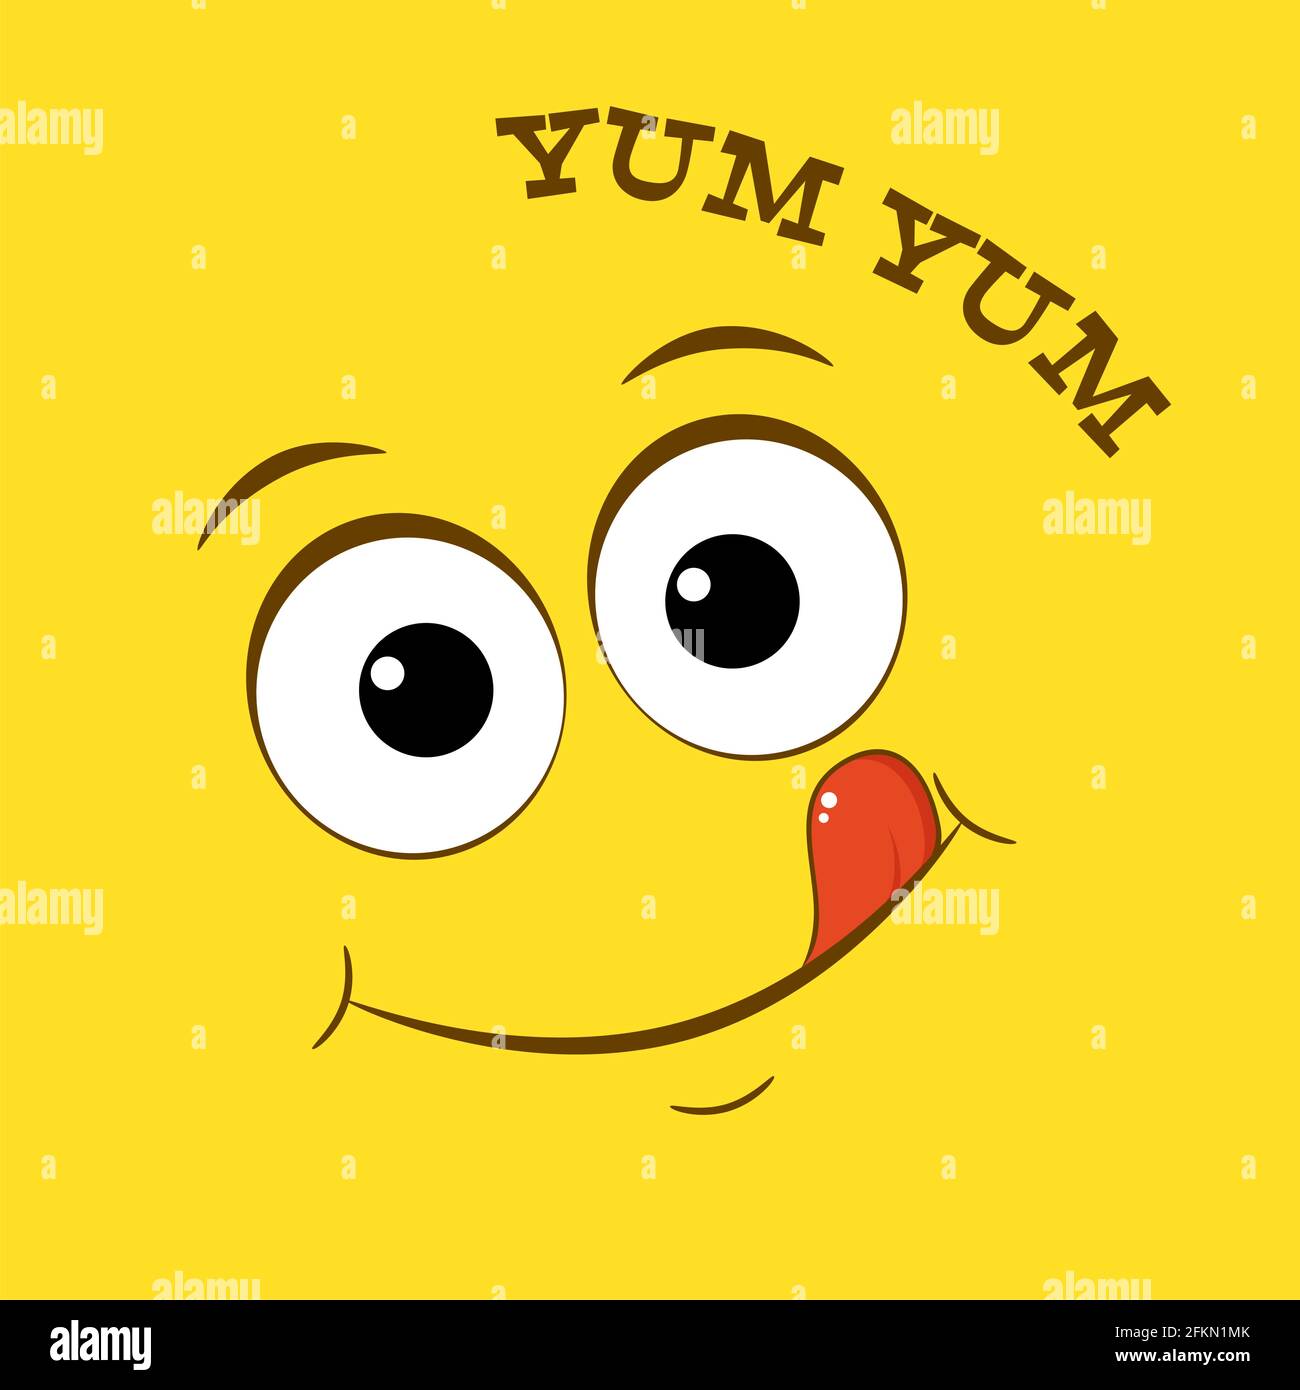 Yummy emoji. Smiling yummy emoticon on yellow background